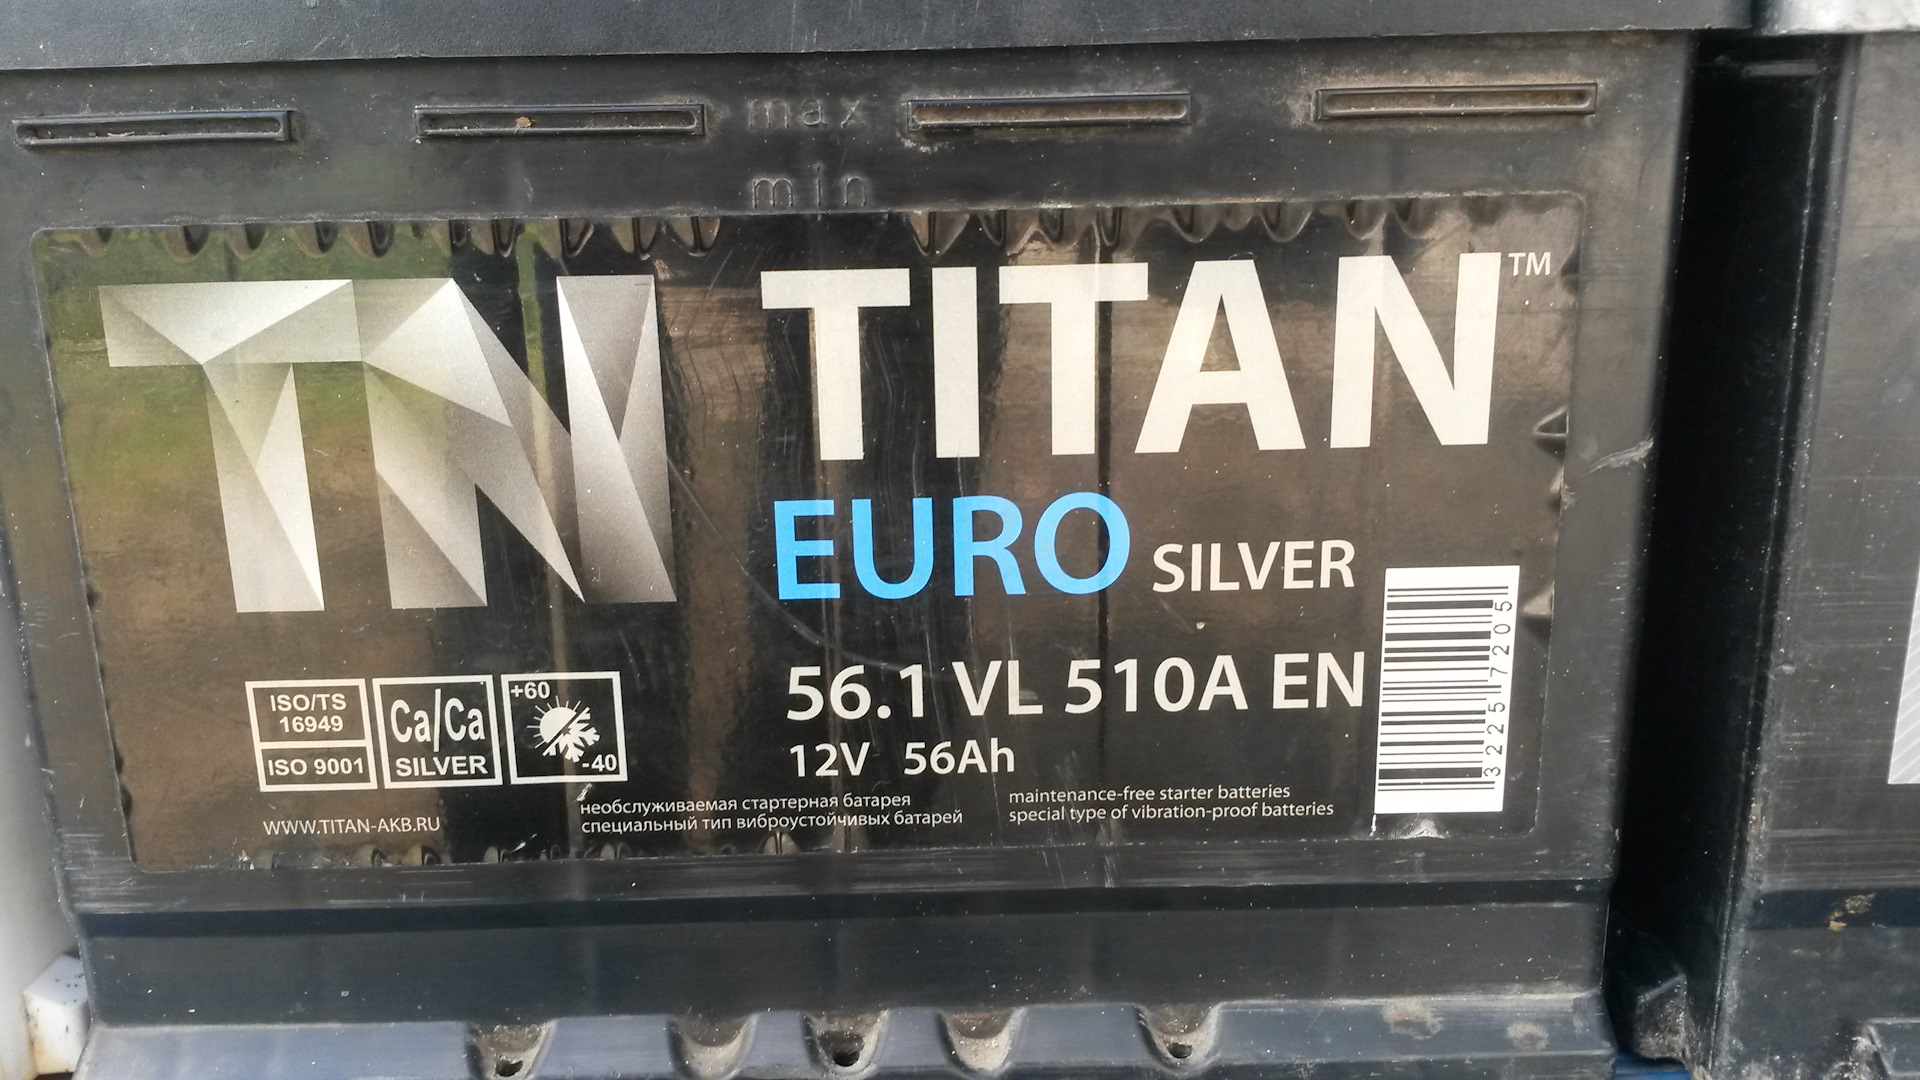 Titan Euro Silver 61.1. Аккумулятор Титан евро Сильвер 61.1. АКБ Титан 72. Titan аккумулятор плакаты. Дата аккумулятора титан